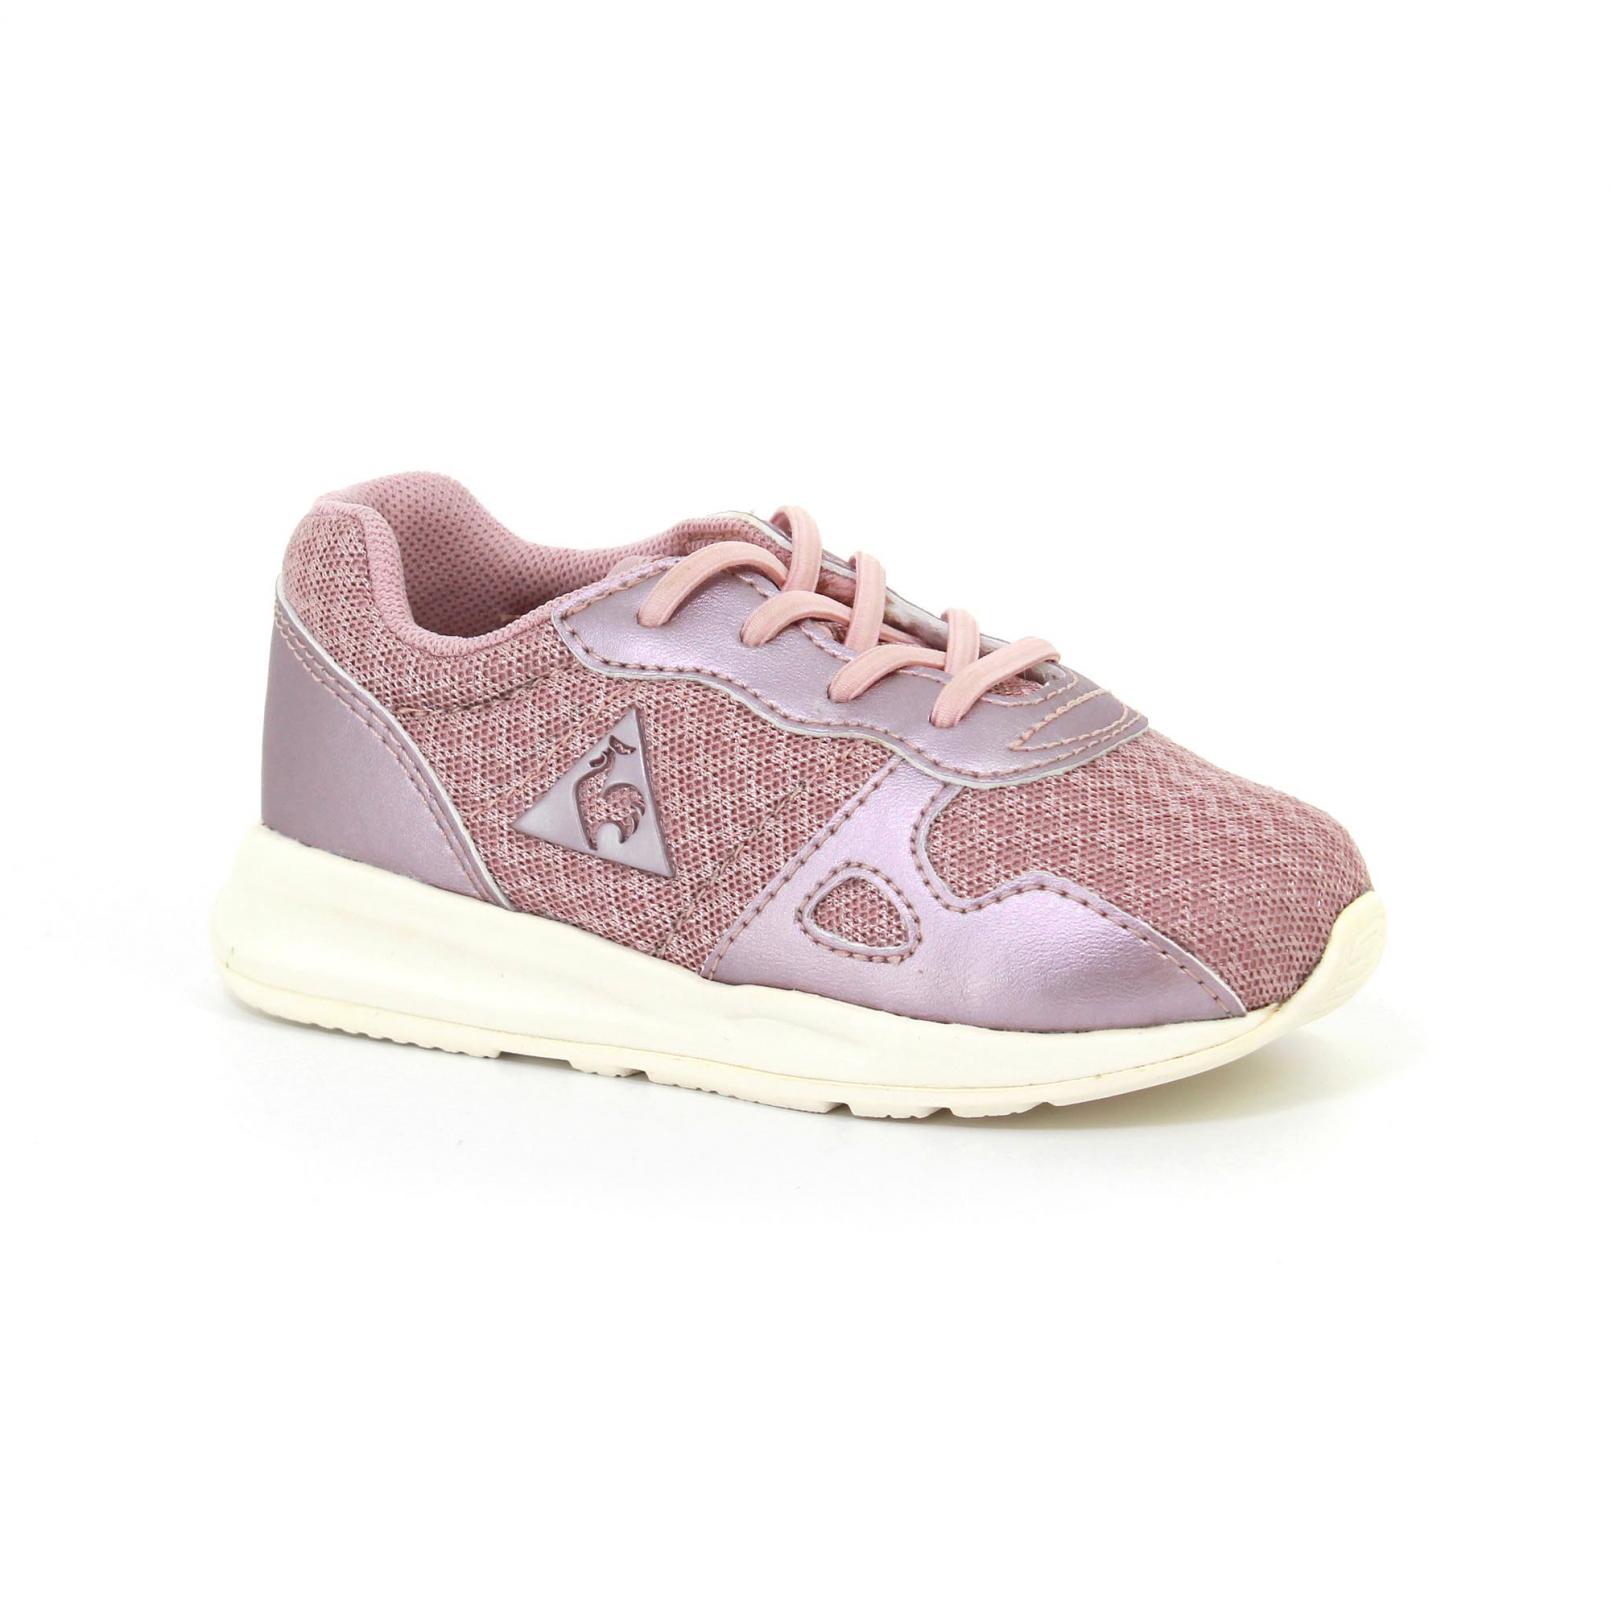 Shoes - Le Coq Sportif Lcs R600 Inf Feminine Mesh/Metallic Pink/Pink ⋆ Dok  Gemiis